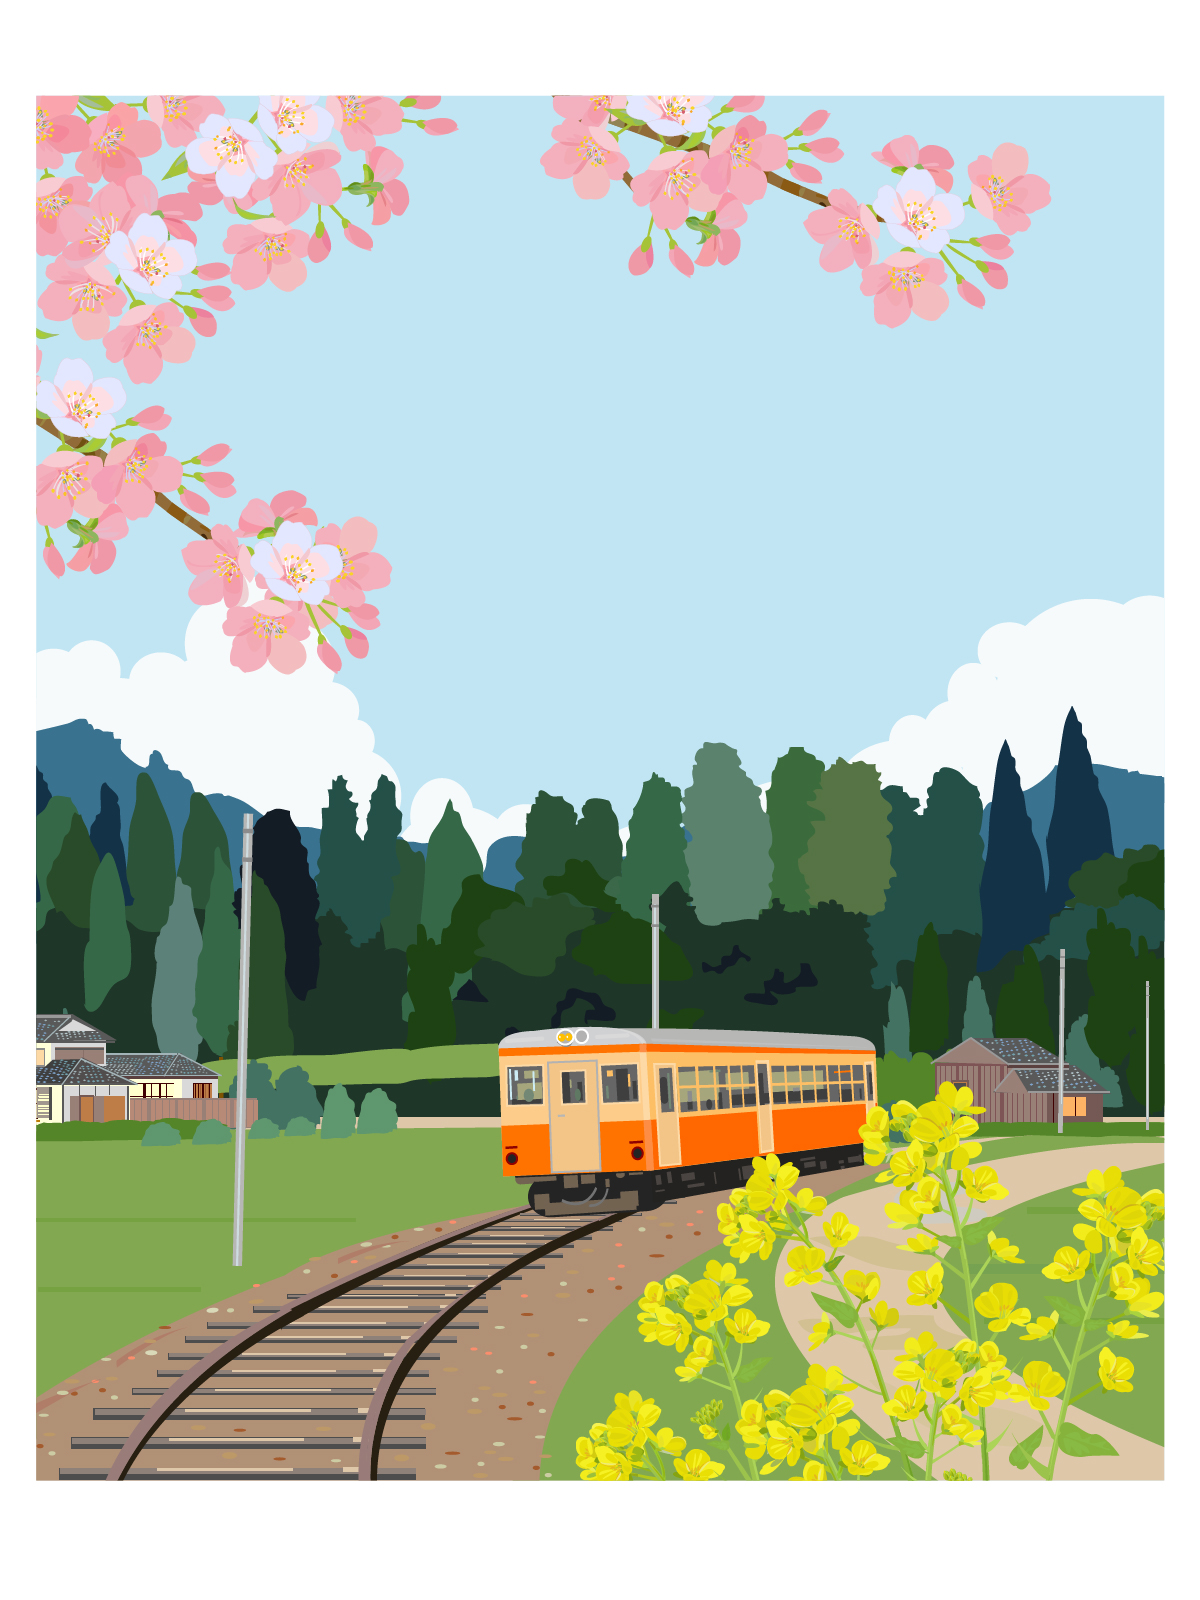 Umi ストックイラスト 春の風景のイラストを描きました 田舎を走るローカル線と桜と菜の花です T Co C0odhz9yst Twitter